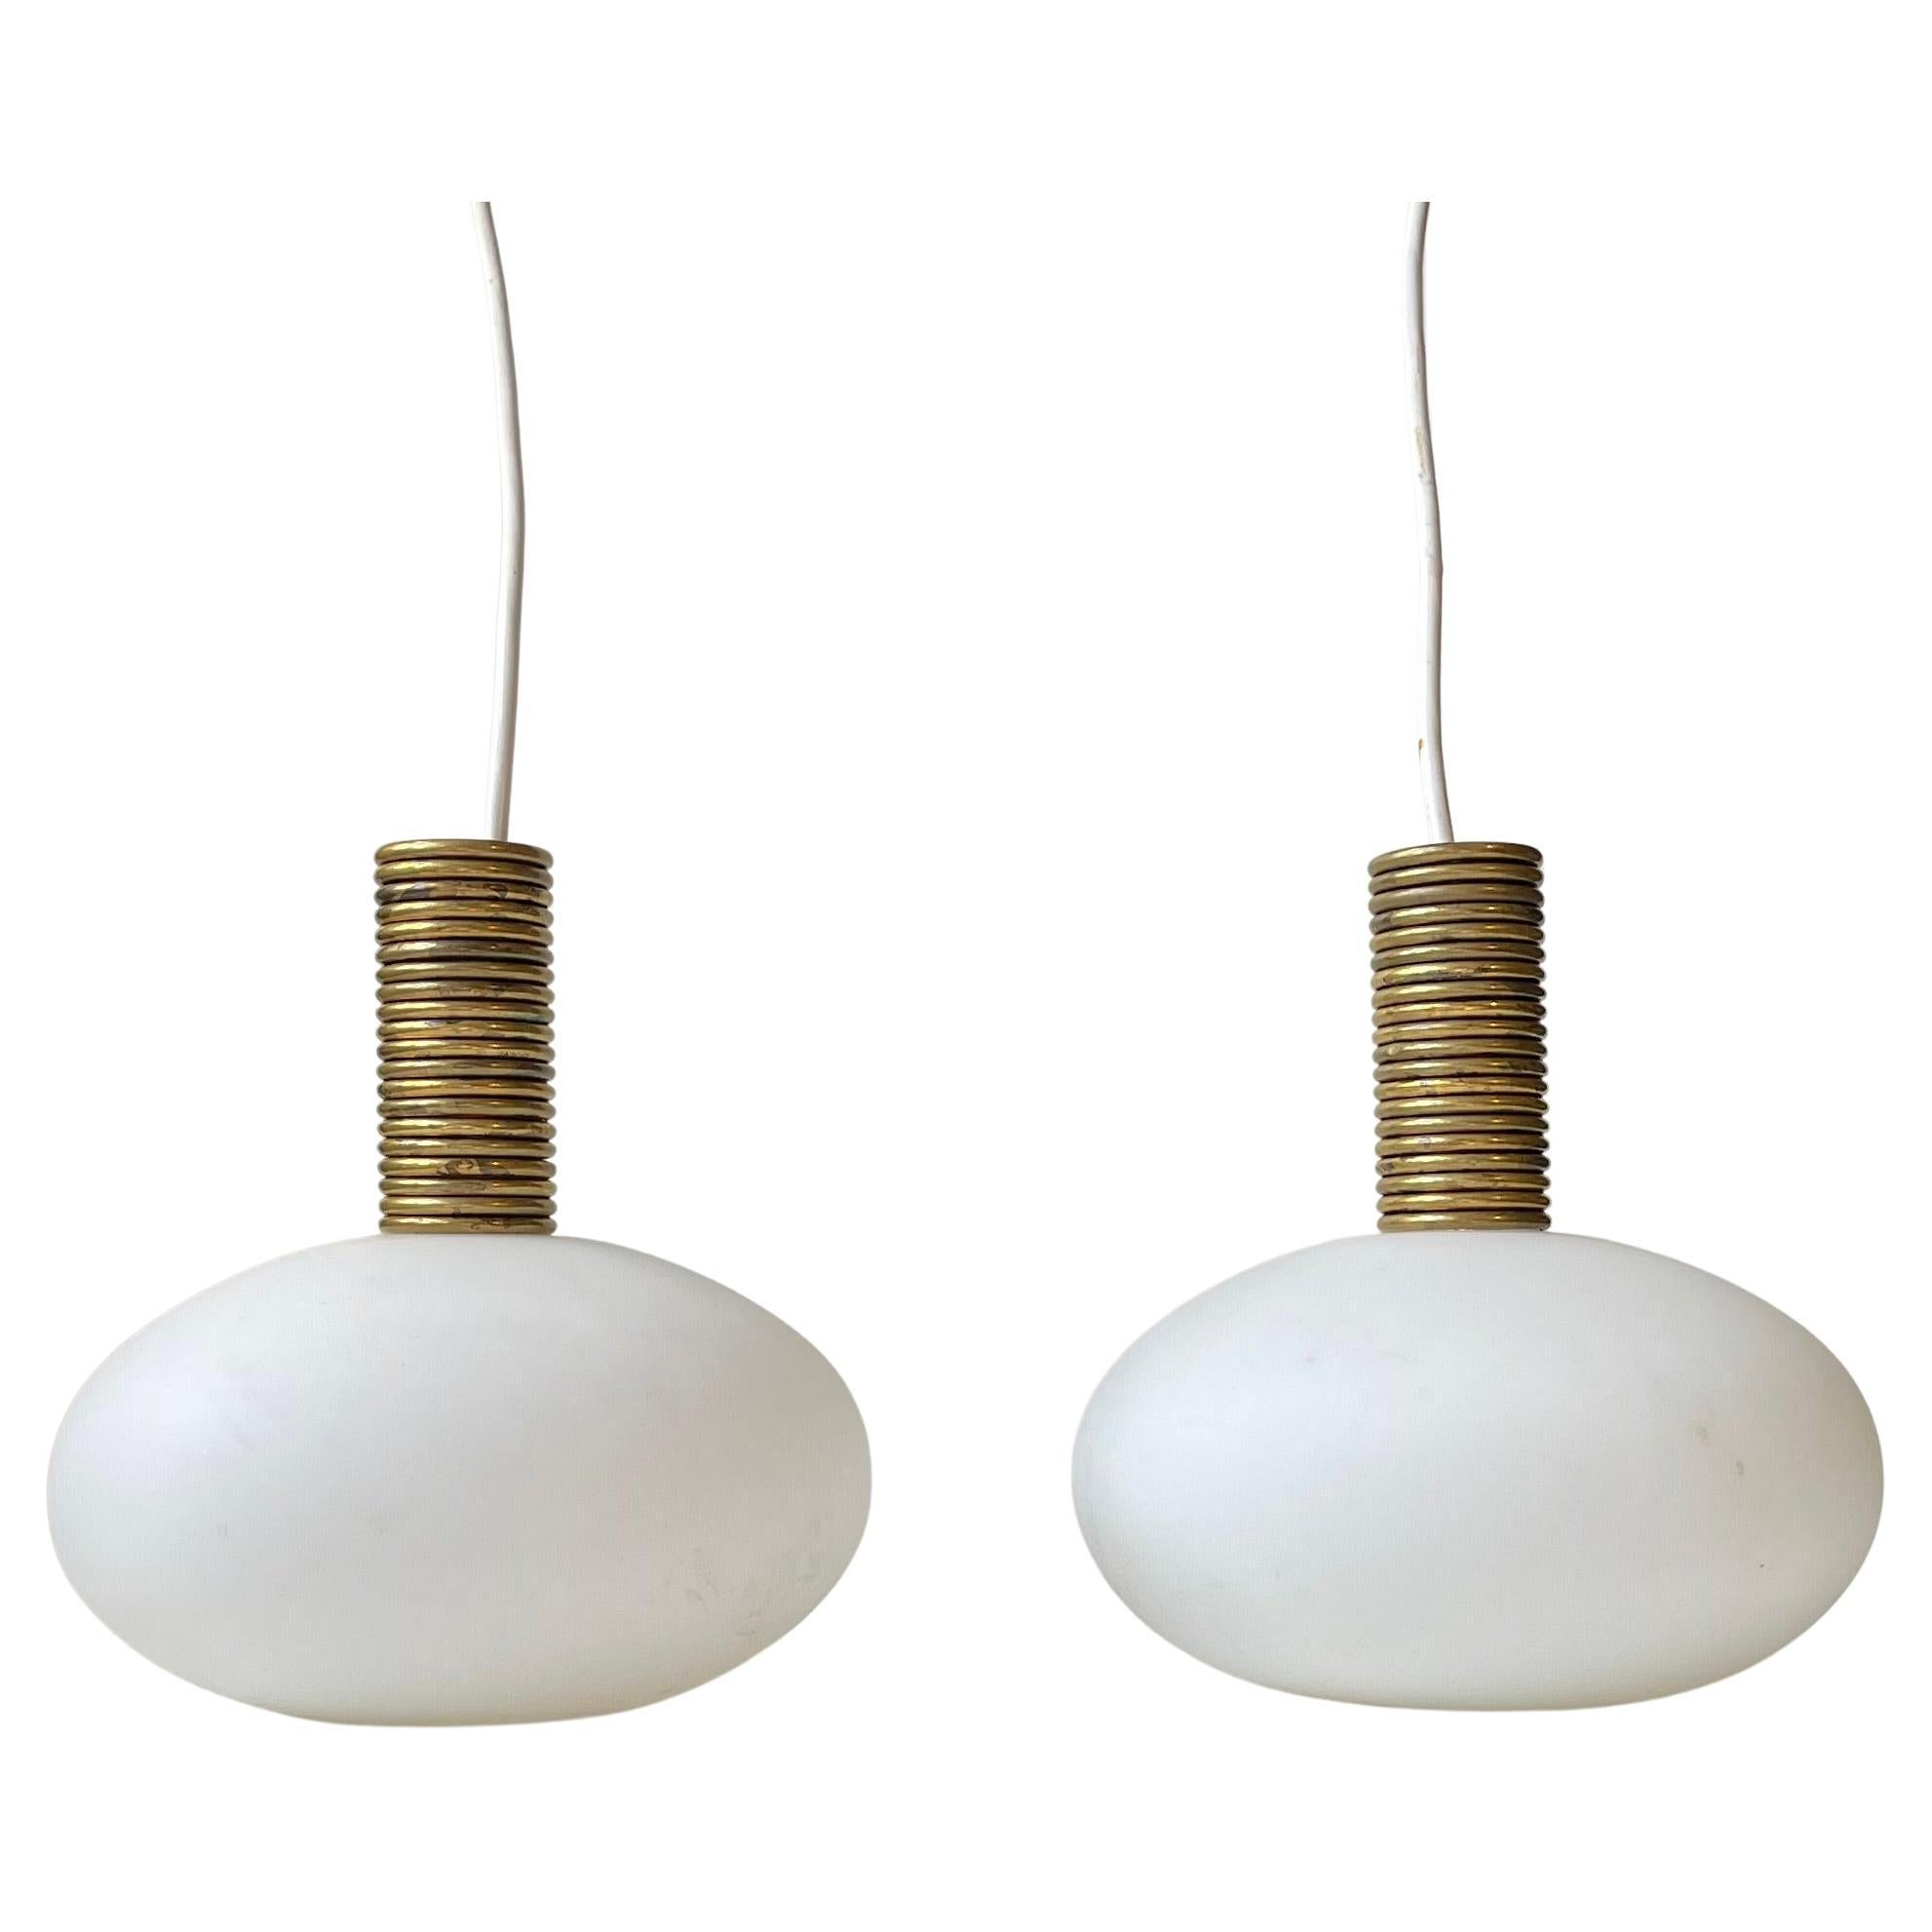 Bespoke Italian Modern Pendant Lamps in Brass and White Glass, 1970s